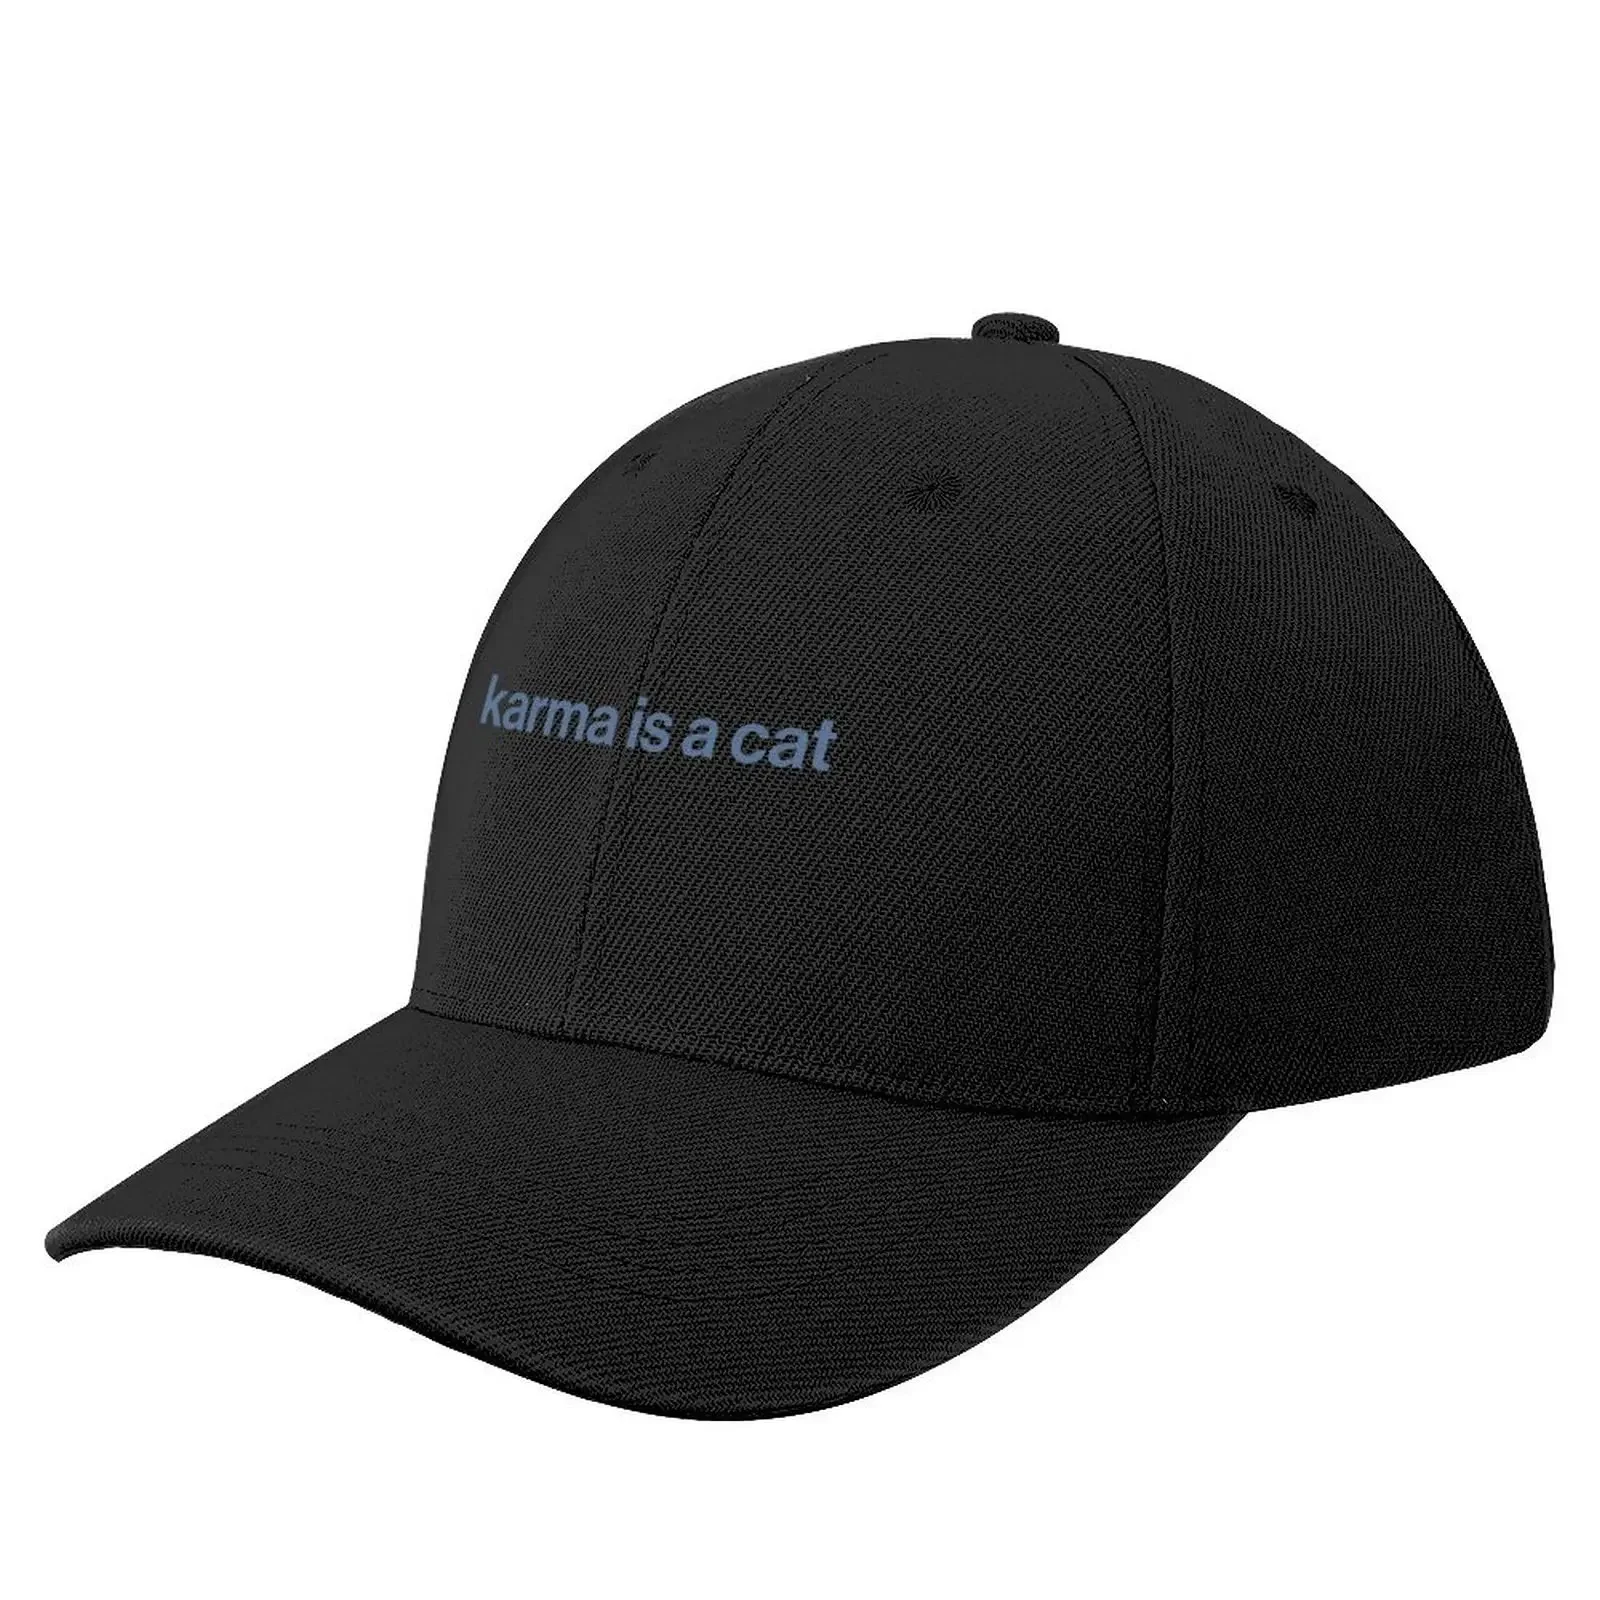 

karma is a cat Baseball Cap Visor Bobble Hat Thermal Visor Men Caps Women's